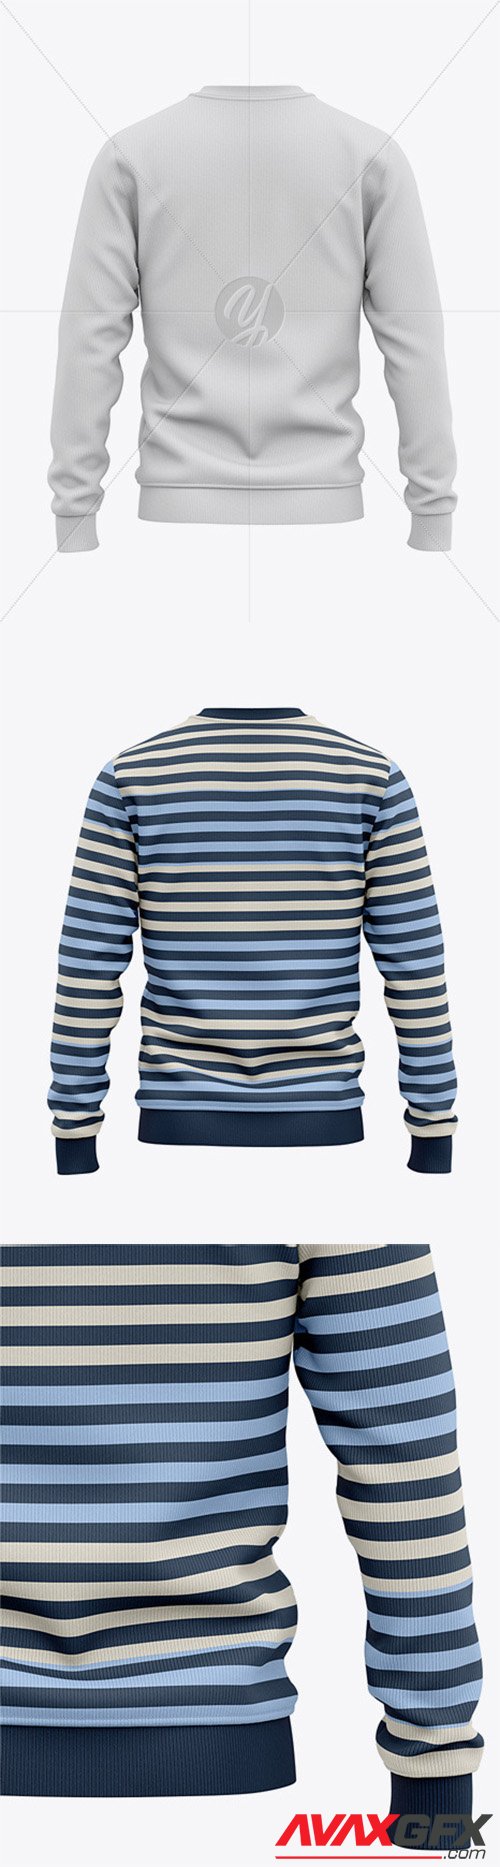 Men's Sweatshirt Mockup - Back View Of Sweater 55660 ...